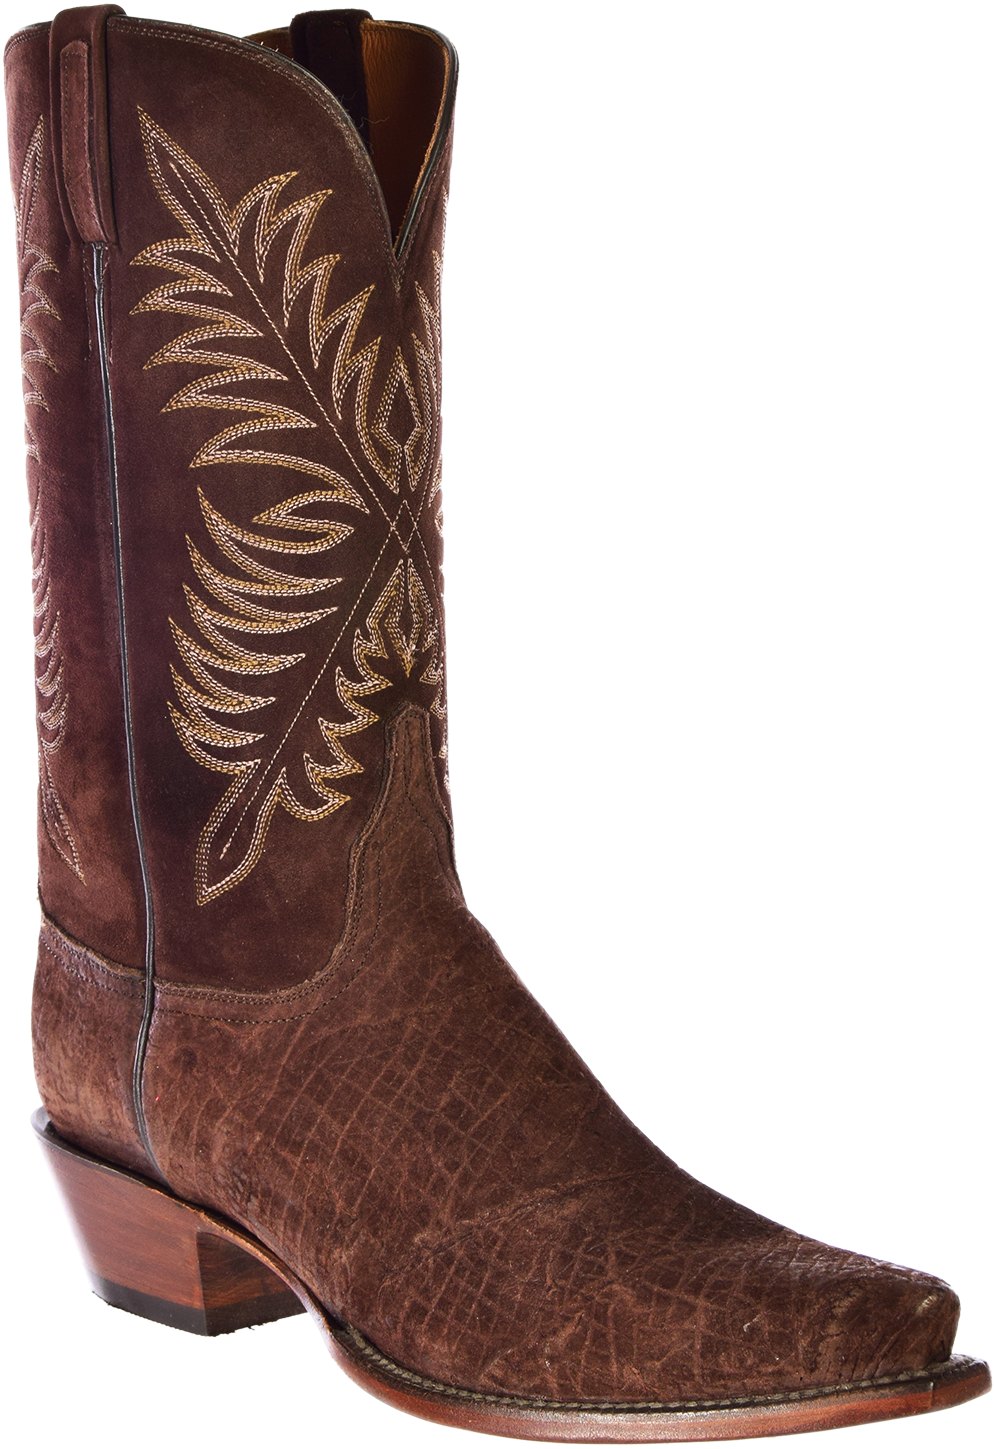 Brown Western Cowboy Boot PNG